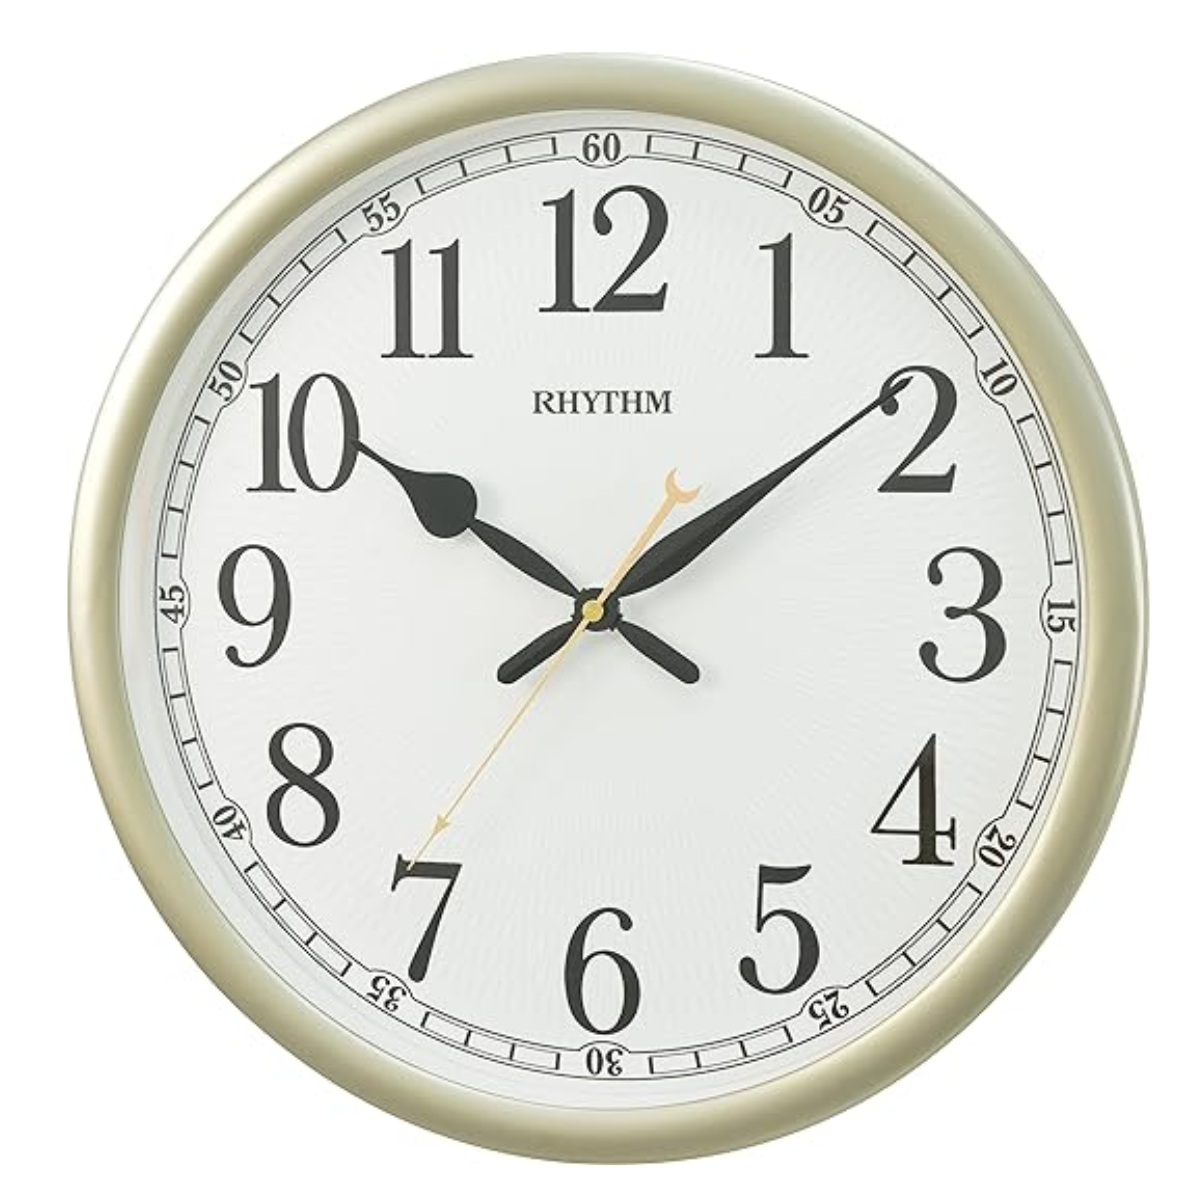 Rhythm CMG610NR08 Quartz Pearl Printing Dial Wall Clock (Singapore Only)